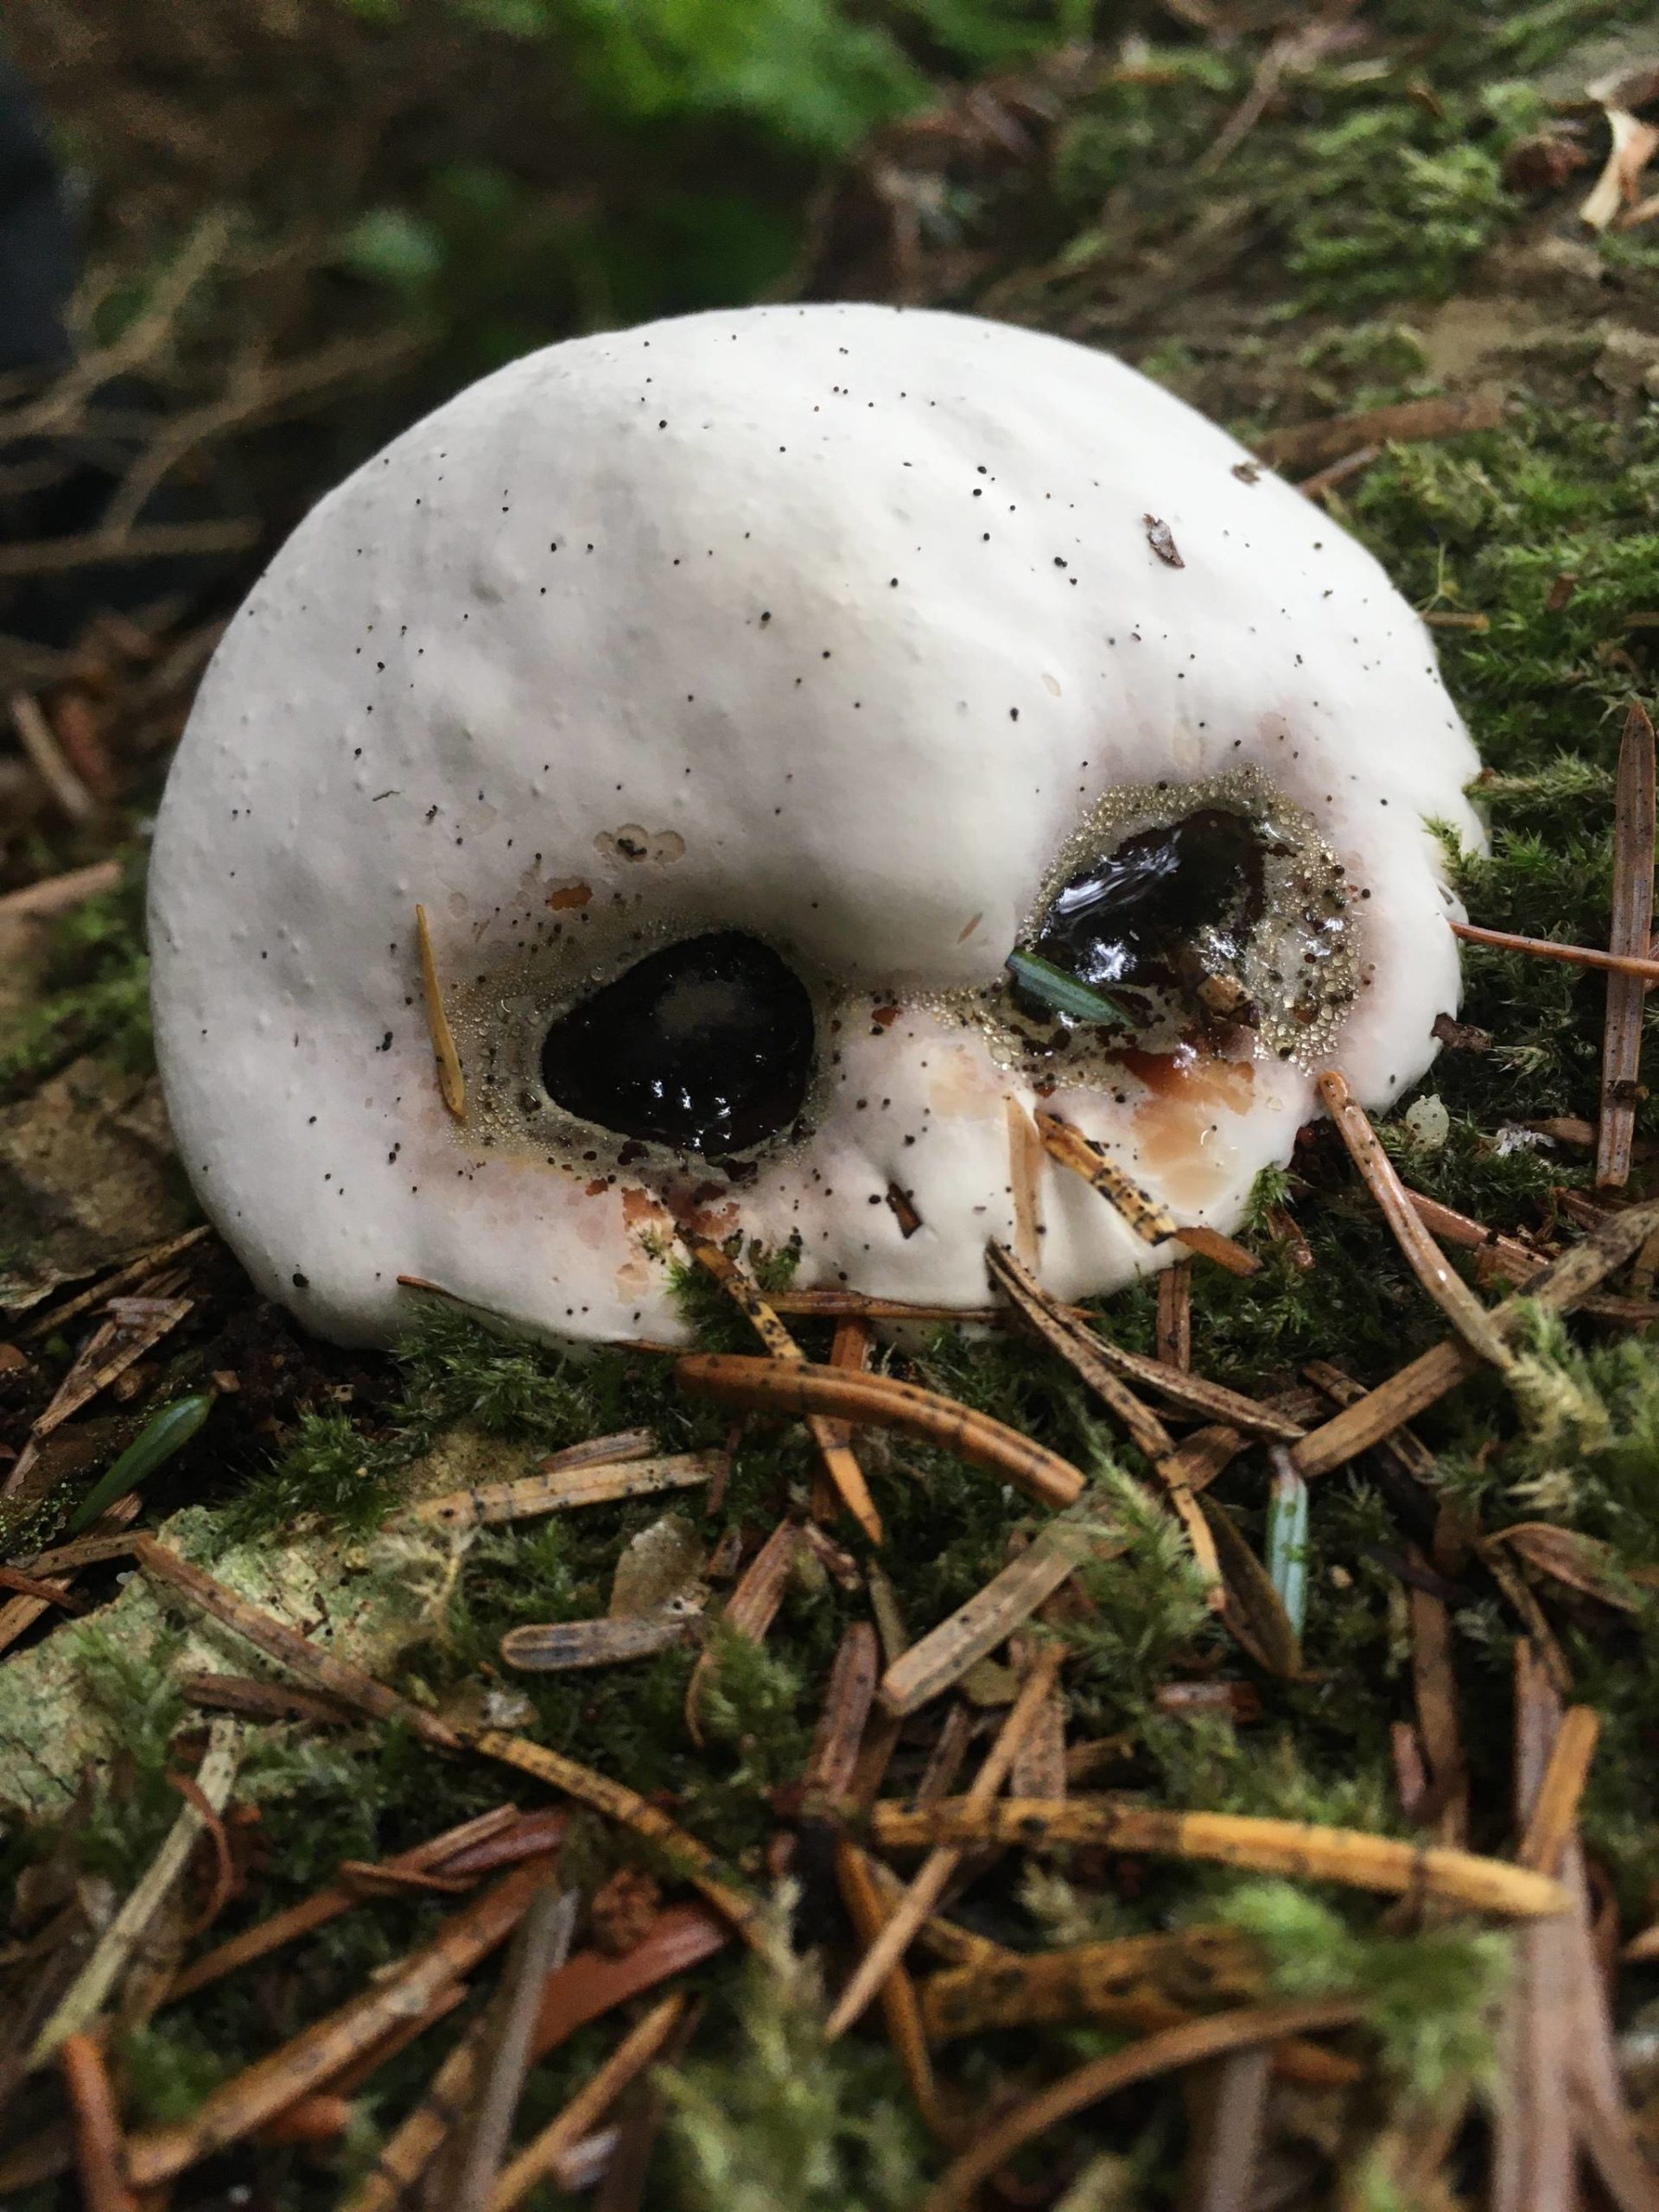 This mushroom appears to be zombie-like. (Courtesy Photo / Deborah Rudis)